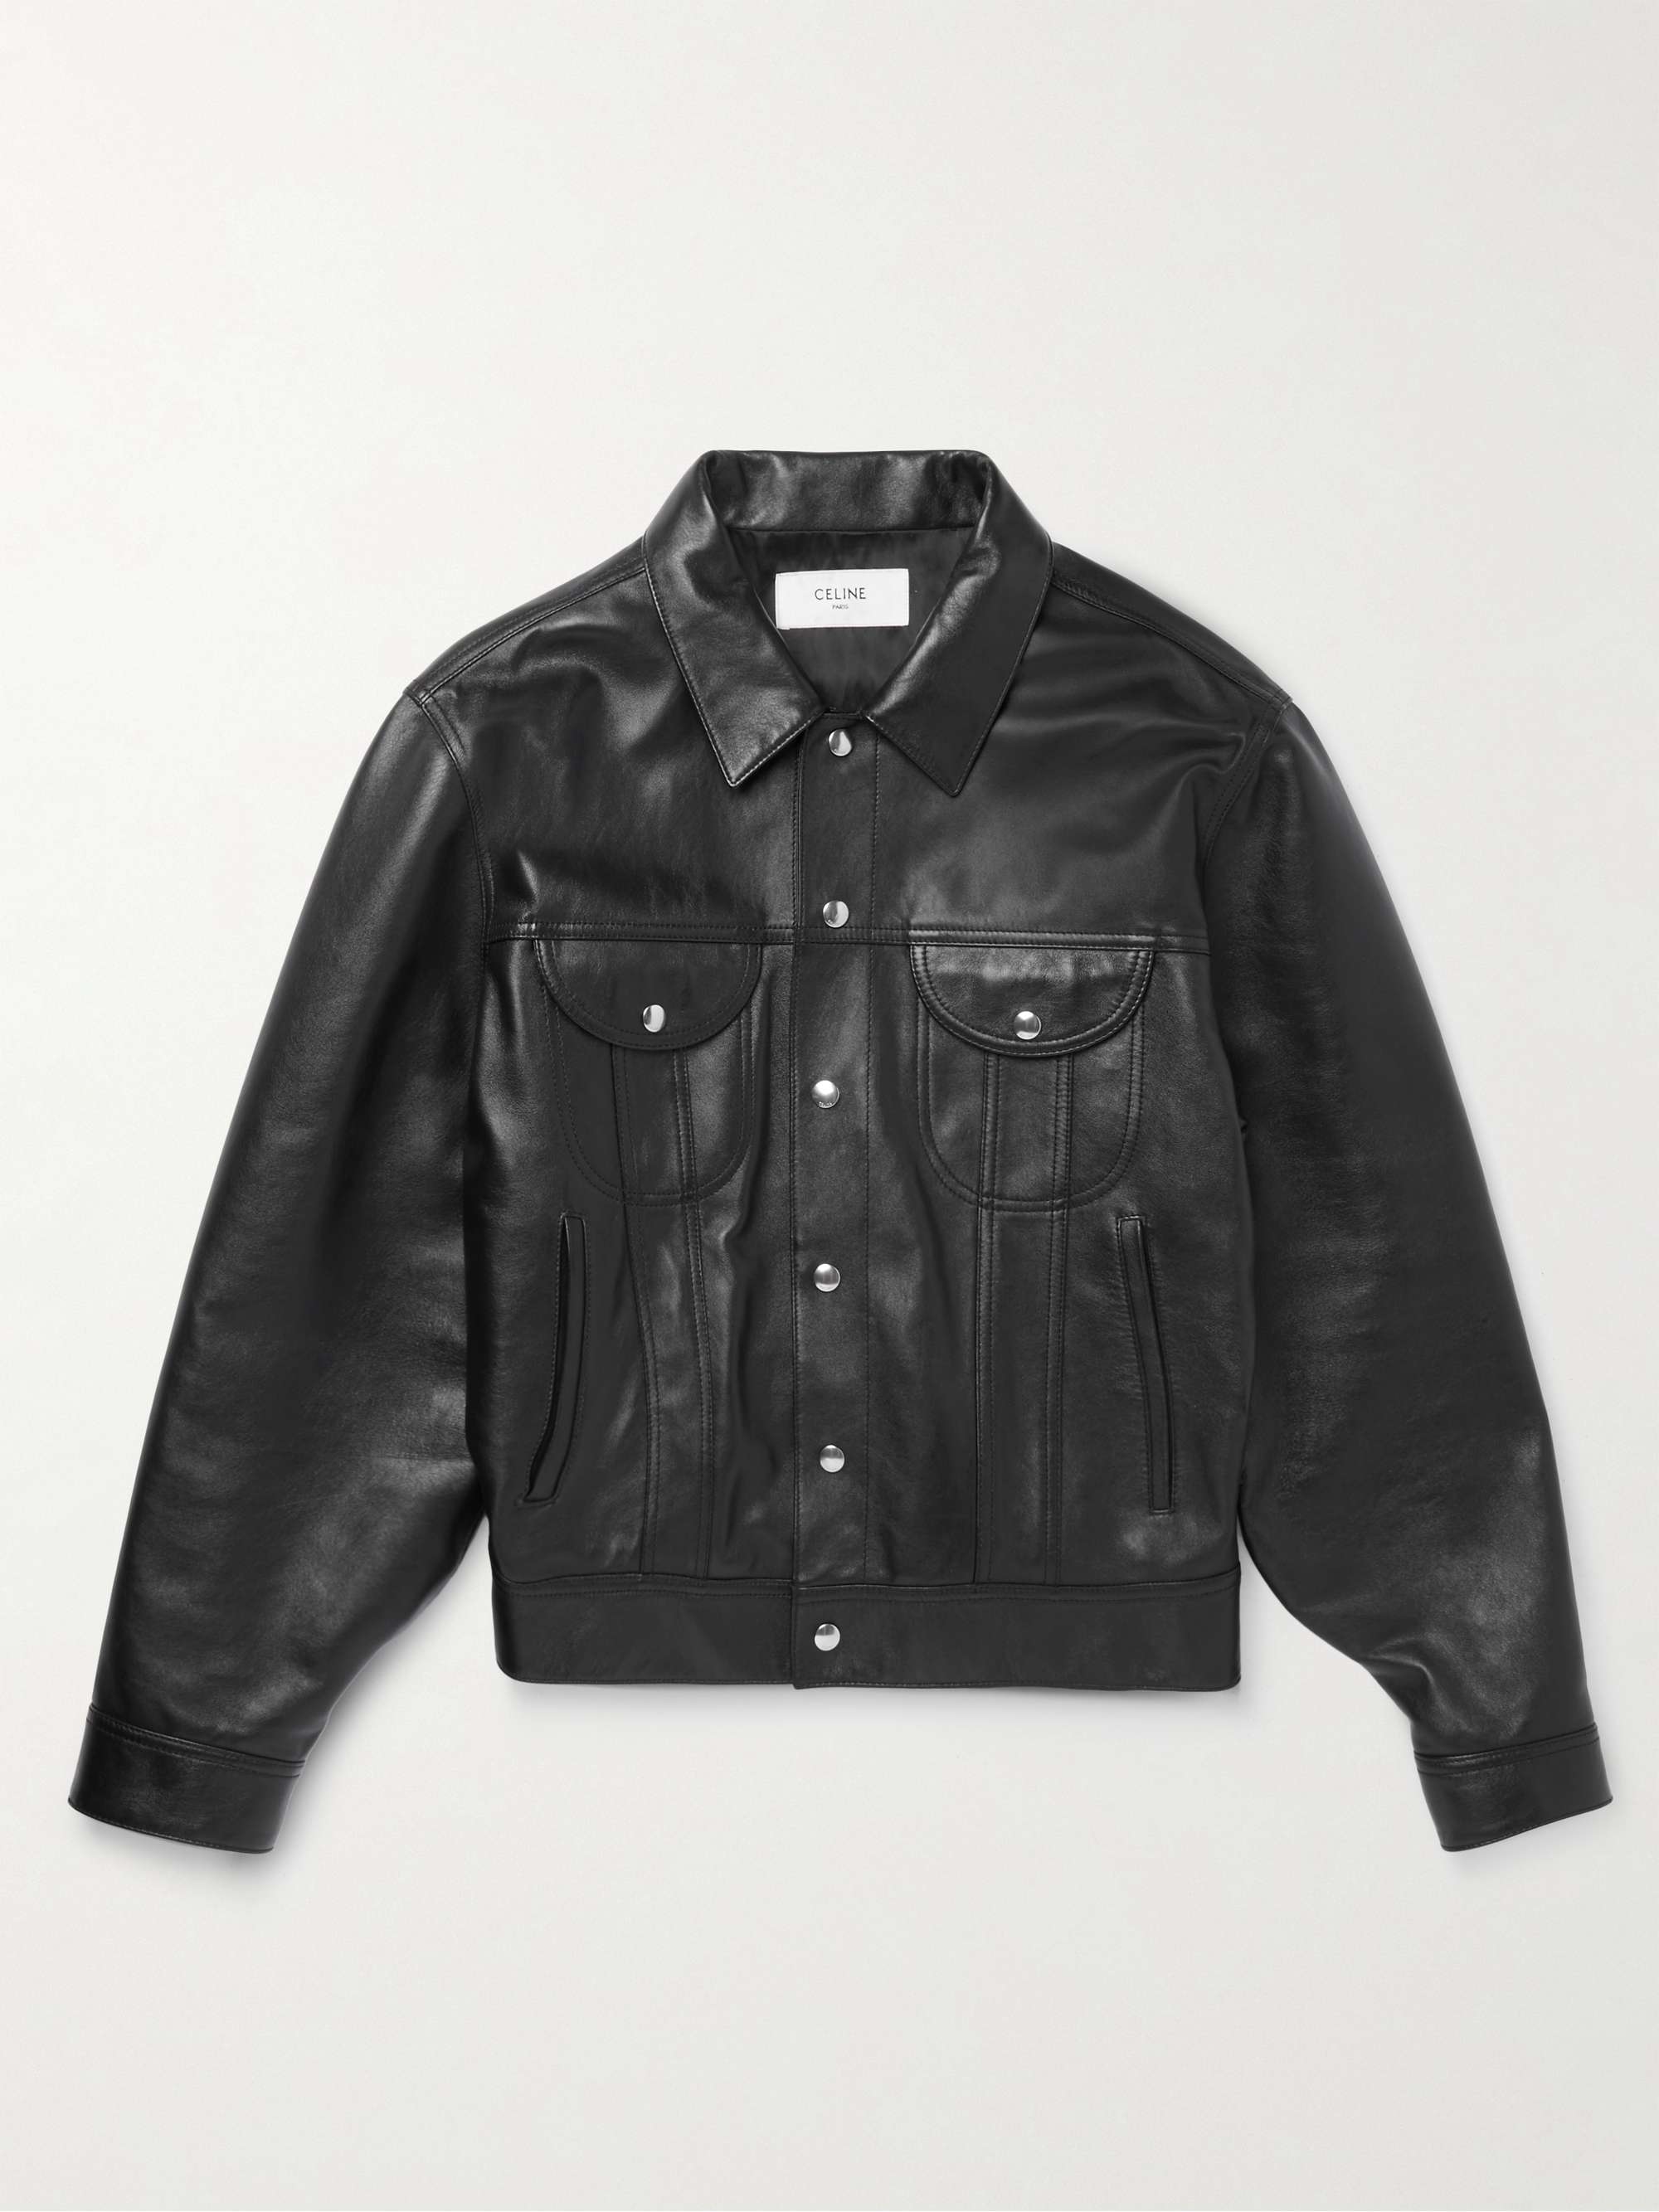 CELINE HOMME Leather Trucker Jacket